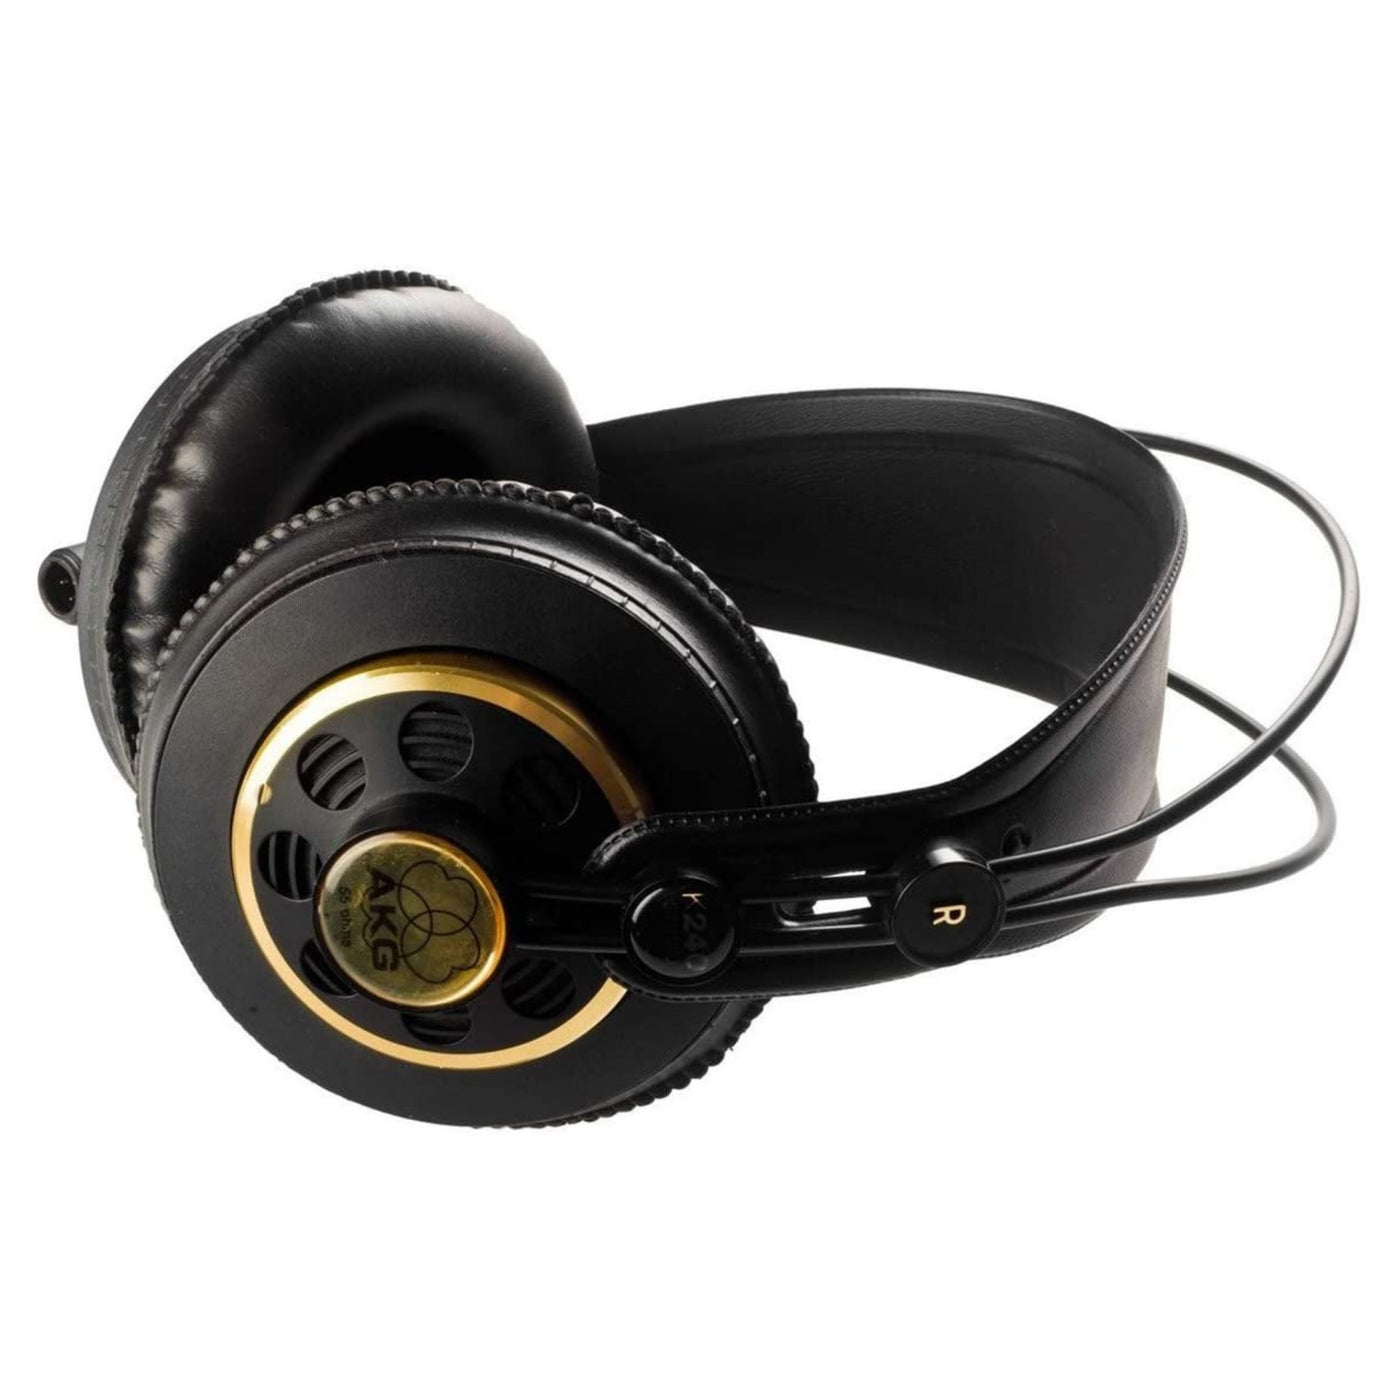 K240 Studio Professional Studio Headphones